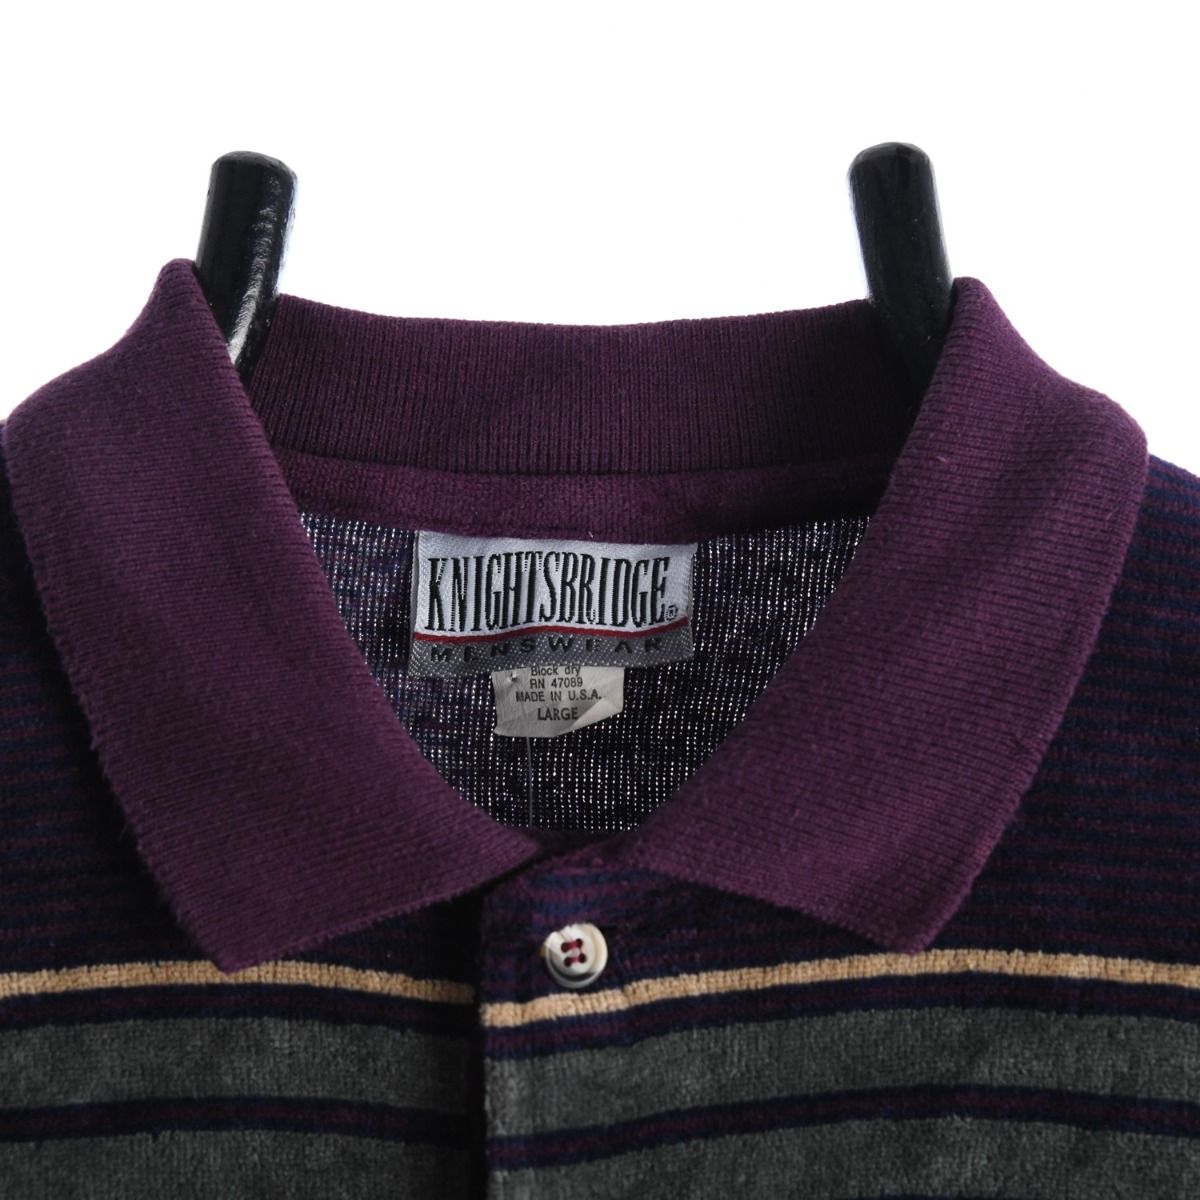 Knightsbridge 1980s Velour Sweatshirt